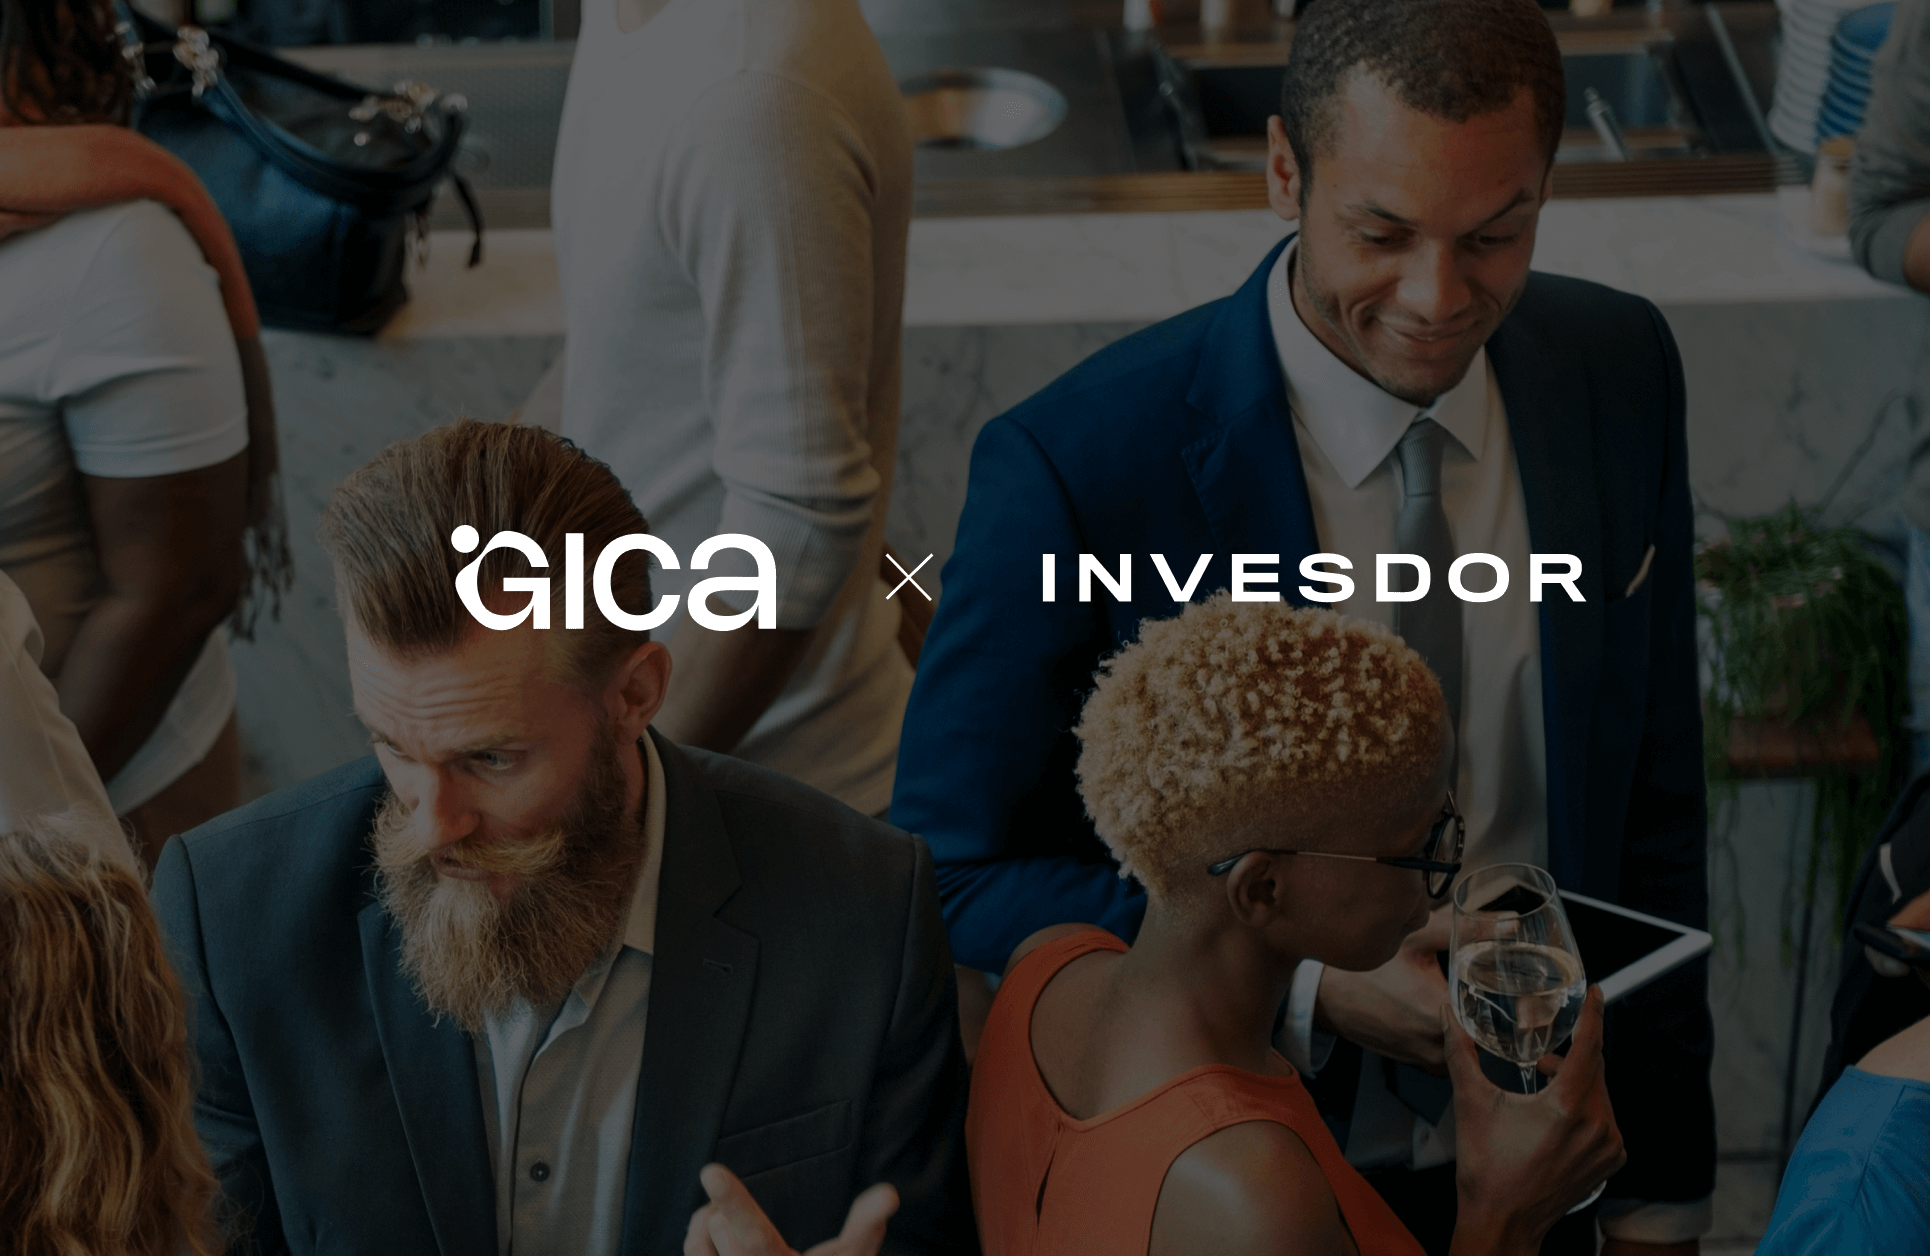 Invesdor and GICA cooperation